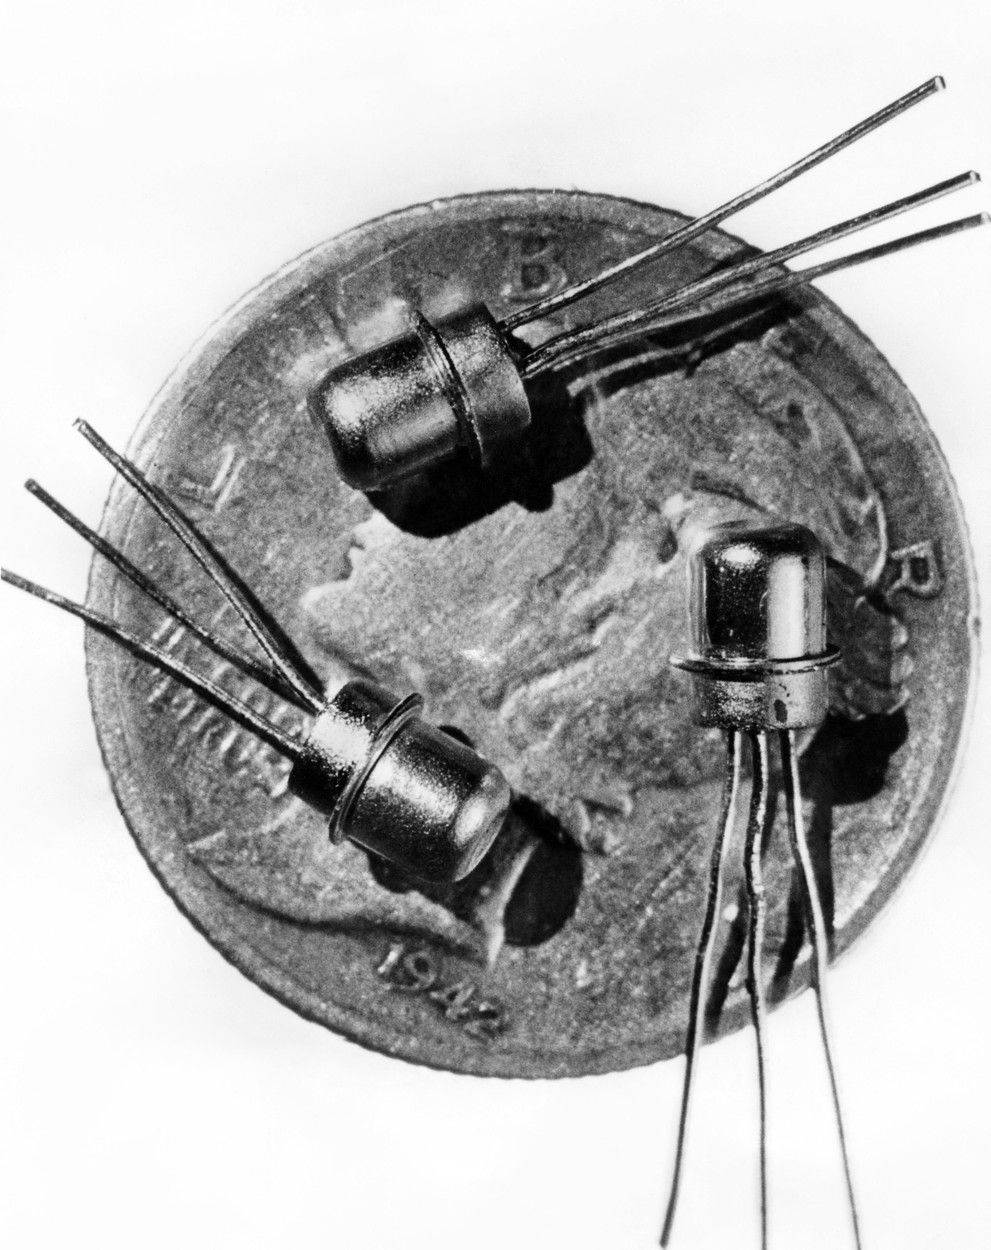  Tranzistor (2).jpg 